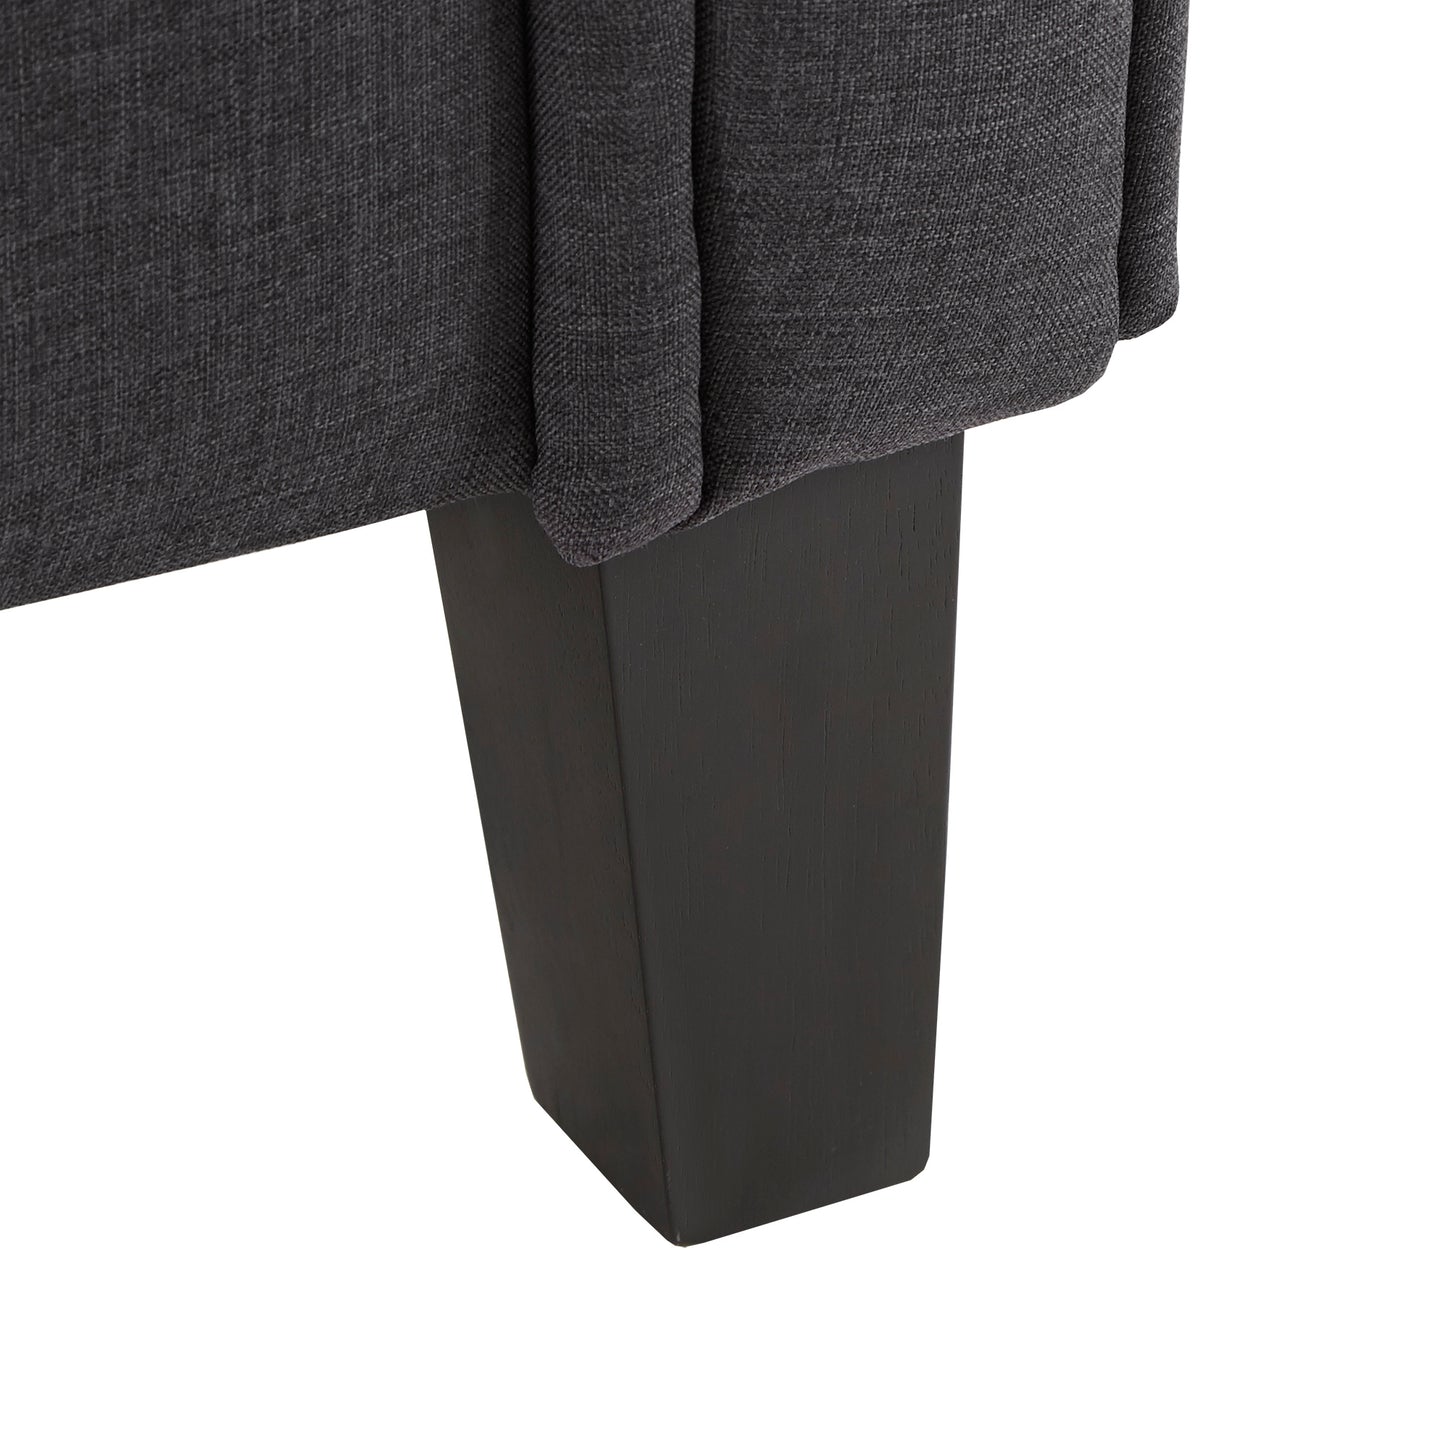 Modern Accent Chair - Dark Grey Linen